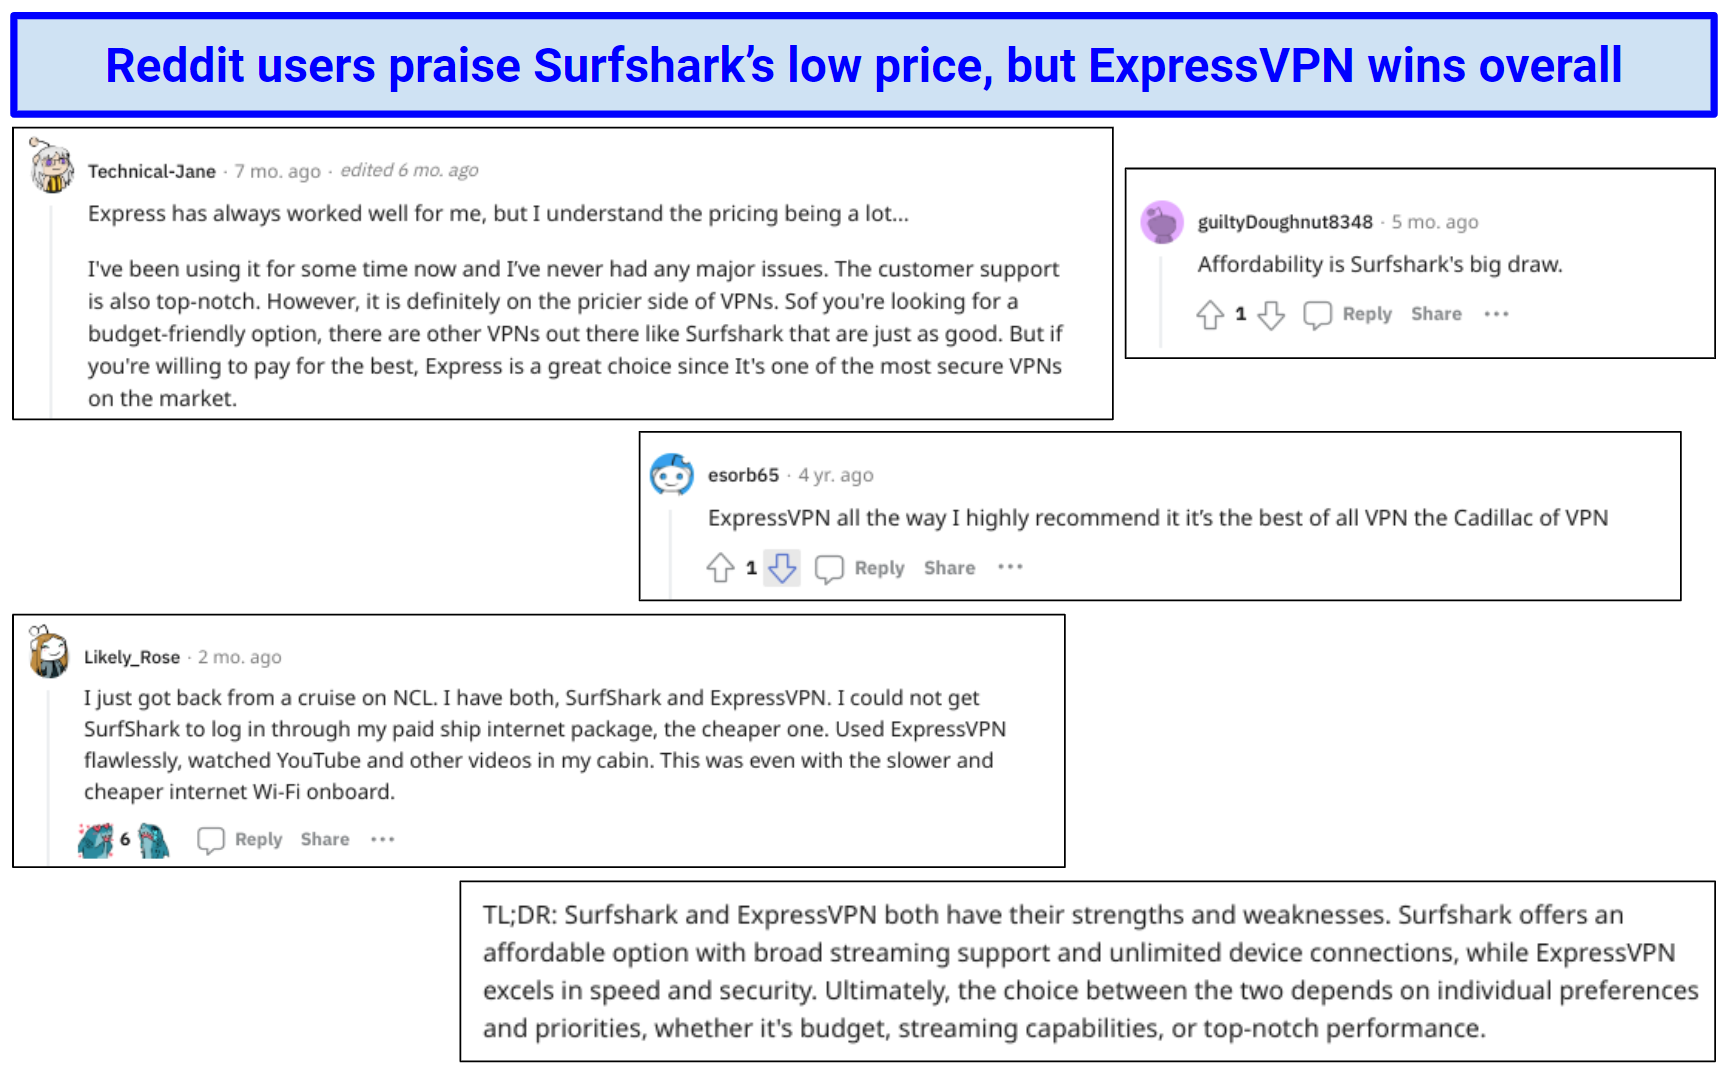 screenshot of Reddit user opinions of Surfshark and ExpressVPN